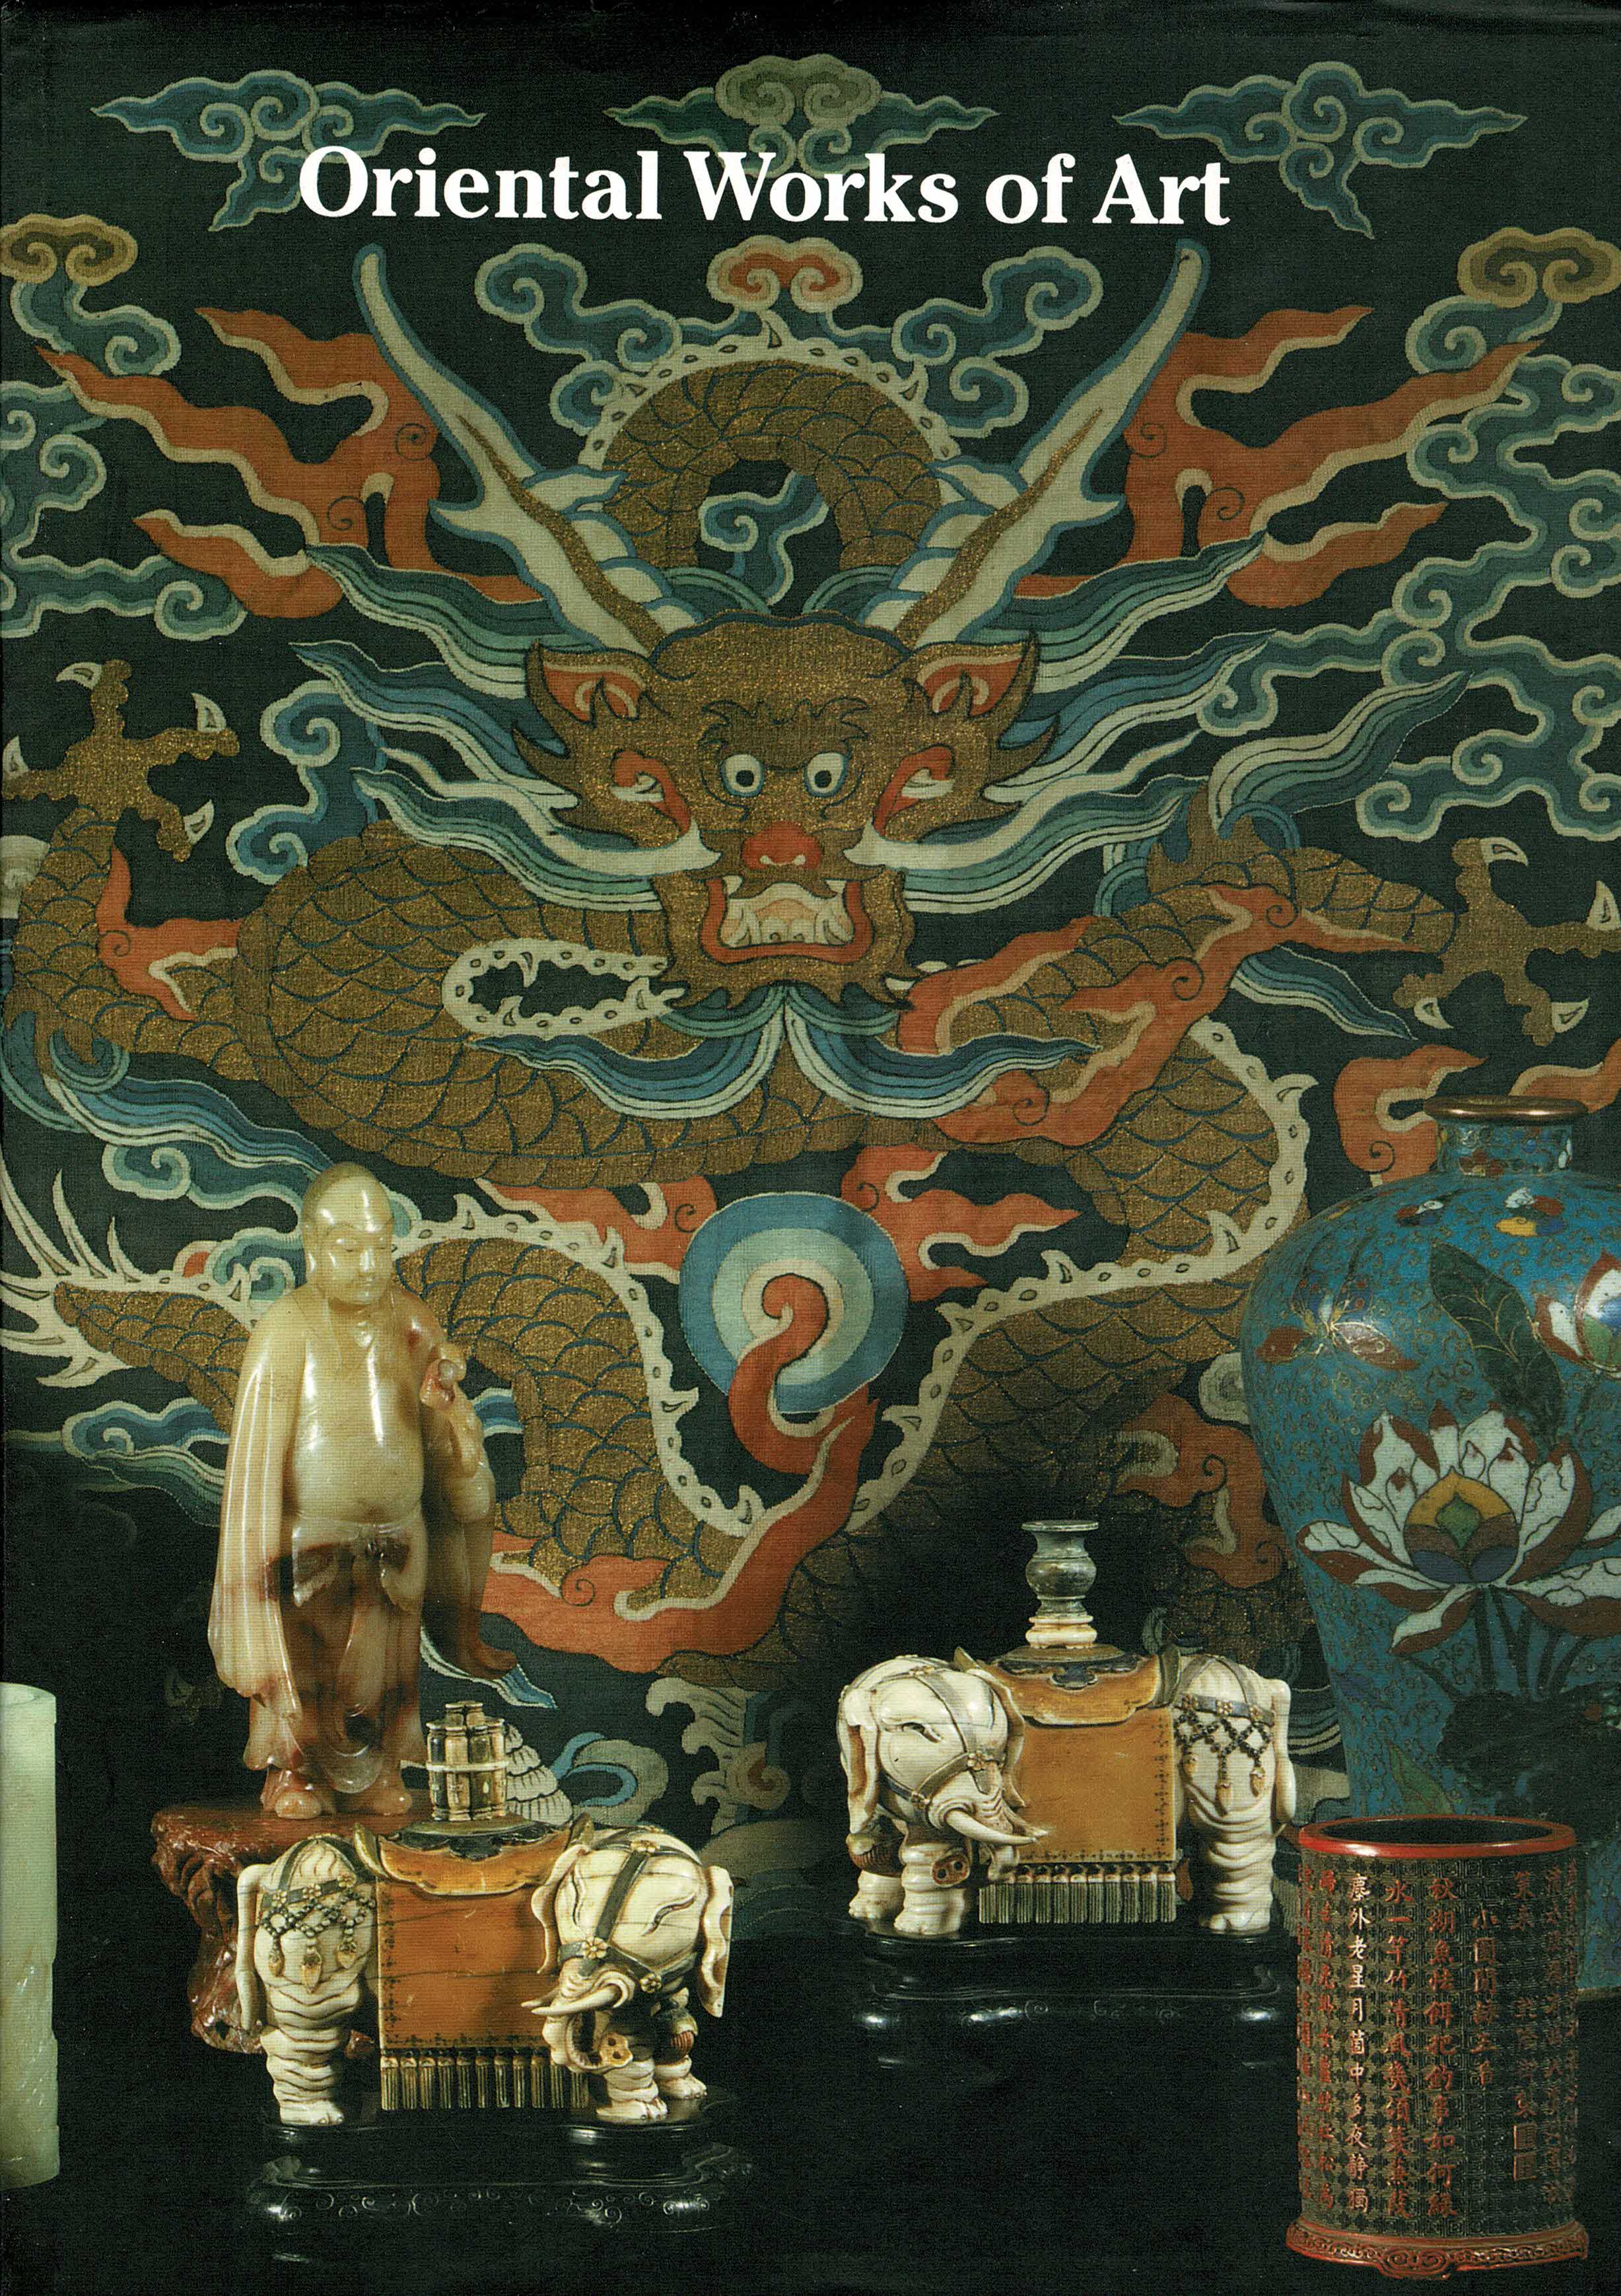 The Oriental Art Gallery - Oriental Works of Art: June 1993